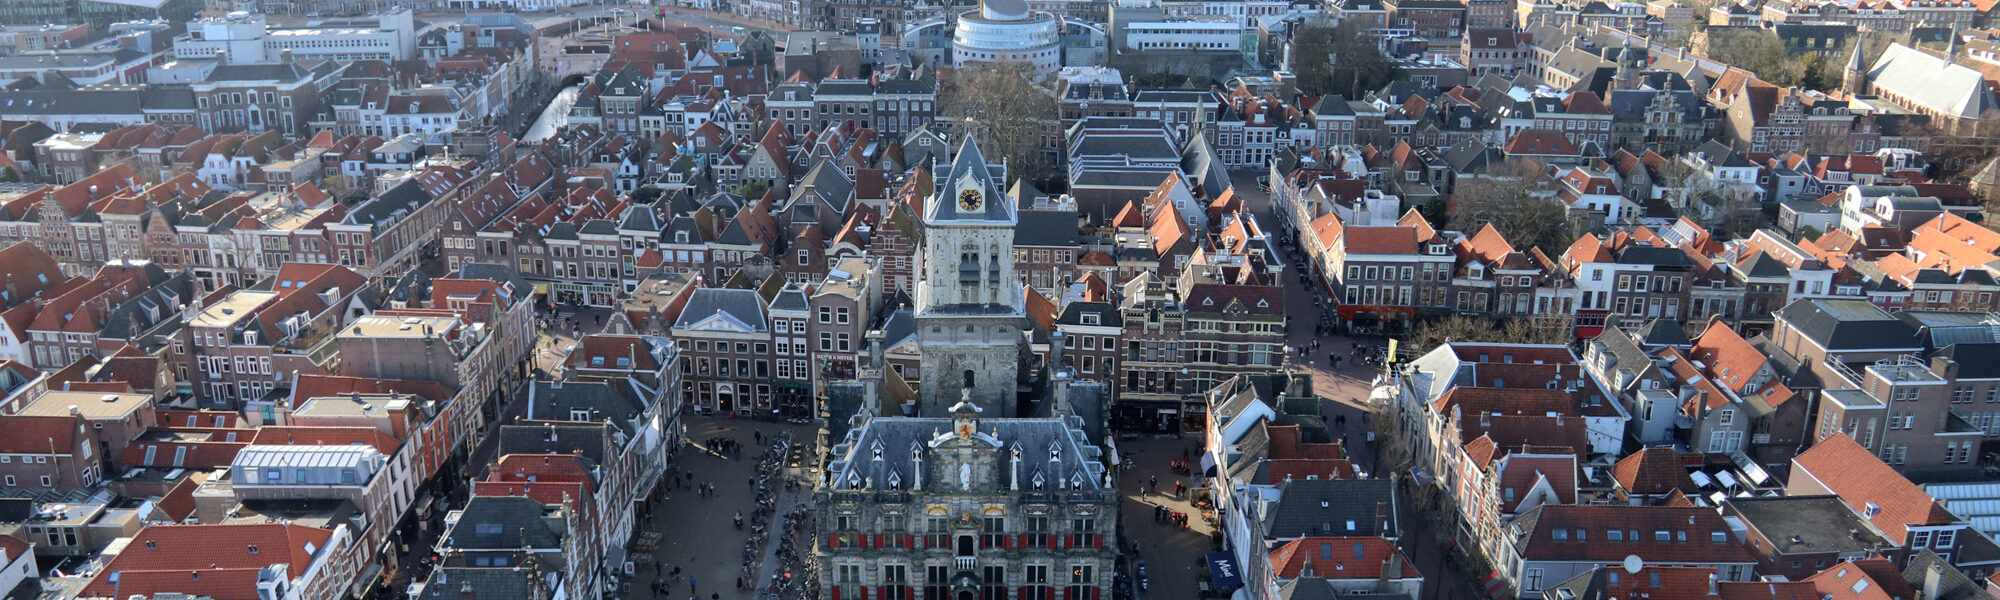 Delft - Nederland